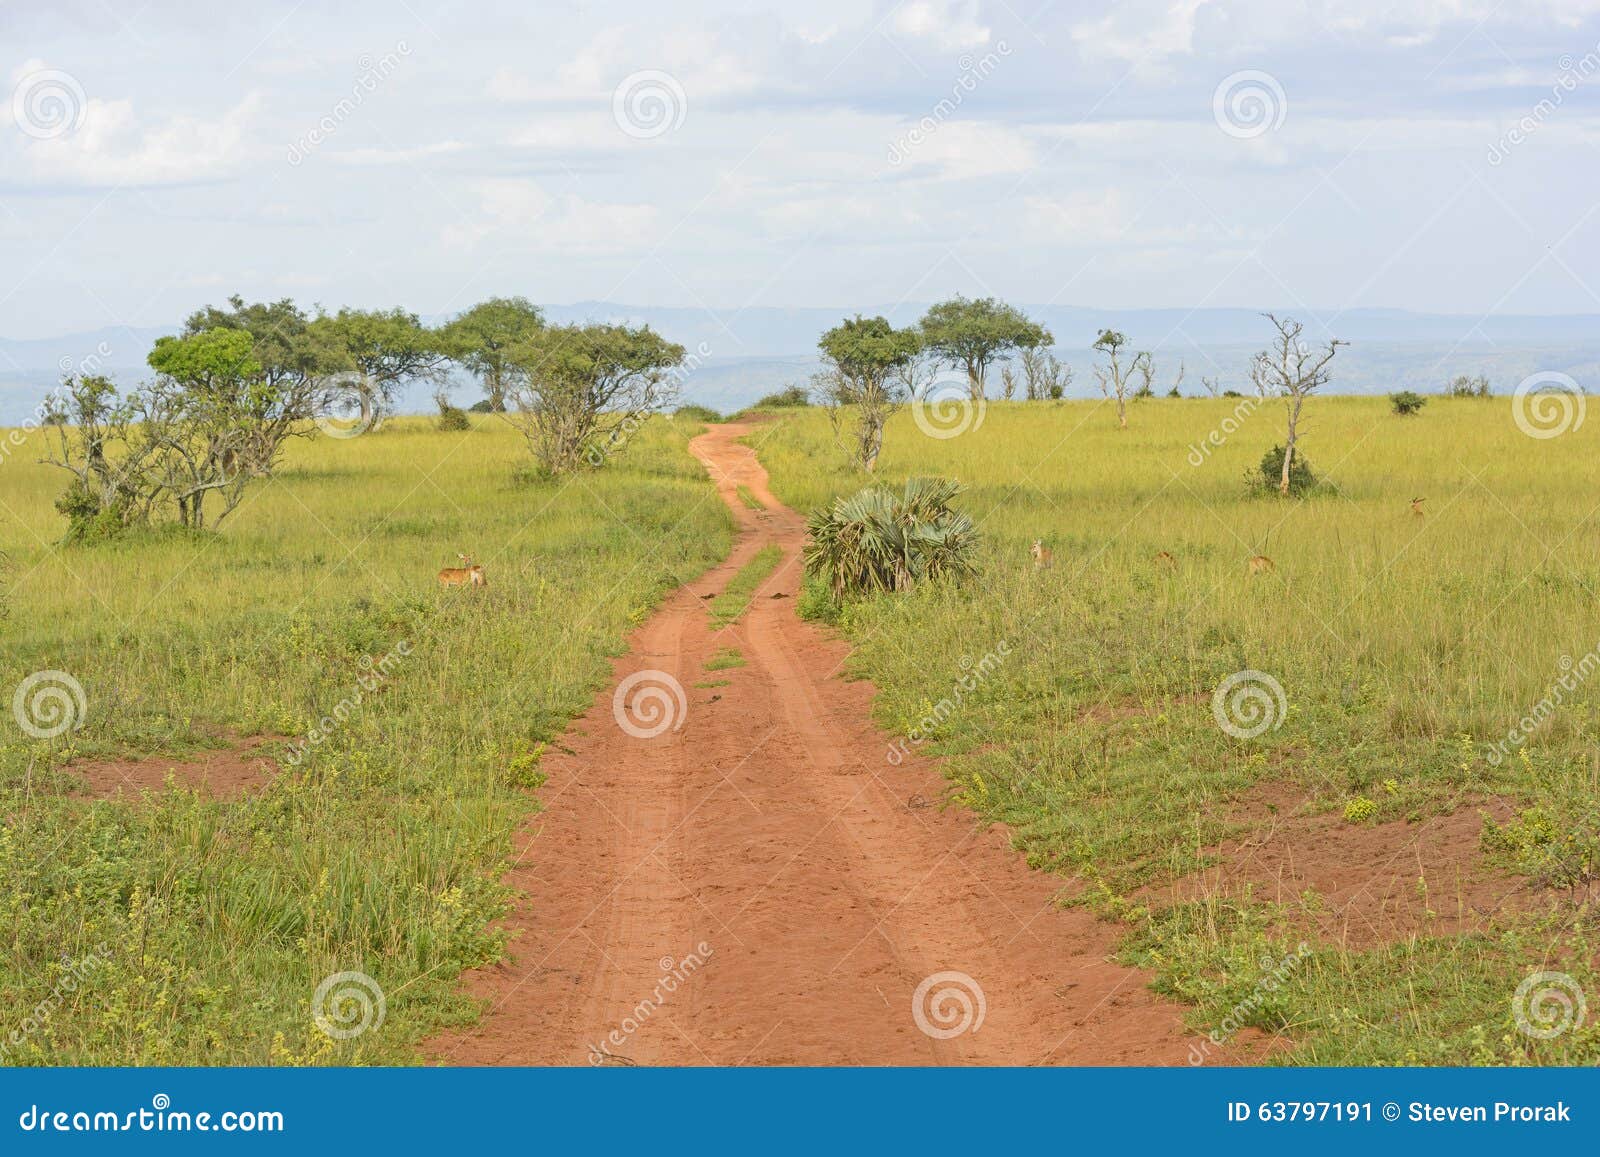 rural road in the african veldt